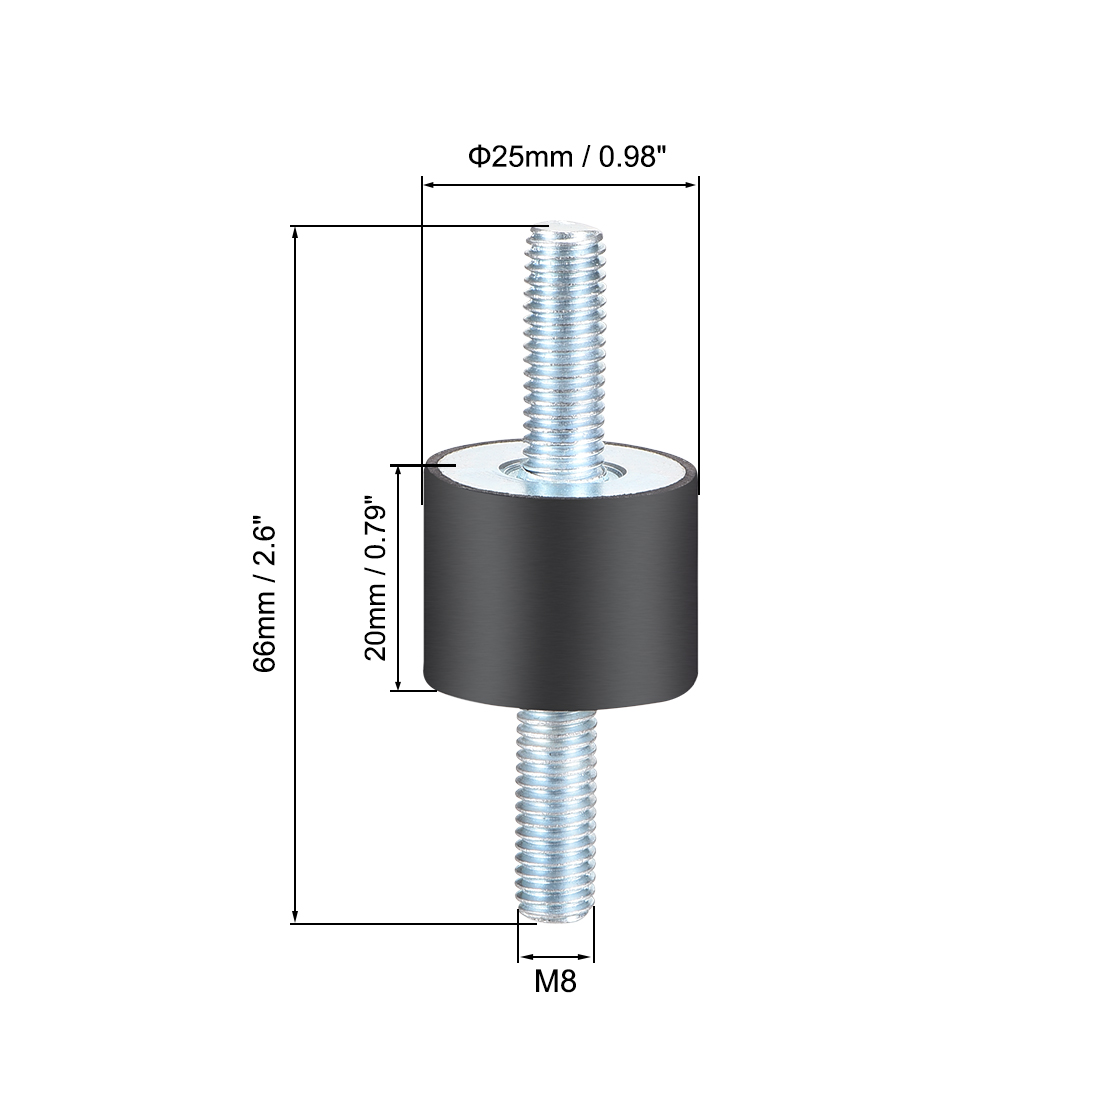 50 x 30mm VD Rubber Vibration Isolator Mounts Shock Absorber M10x24.5mm Studs 